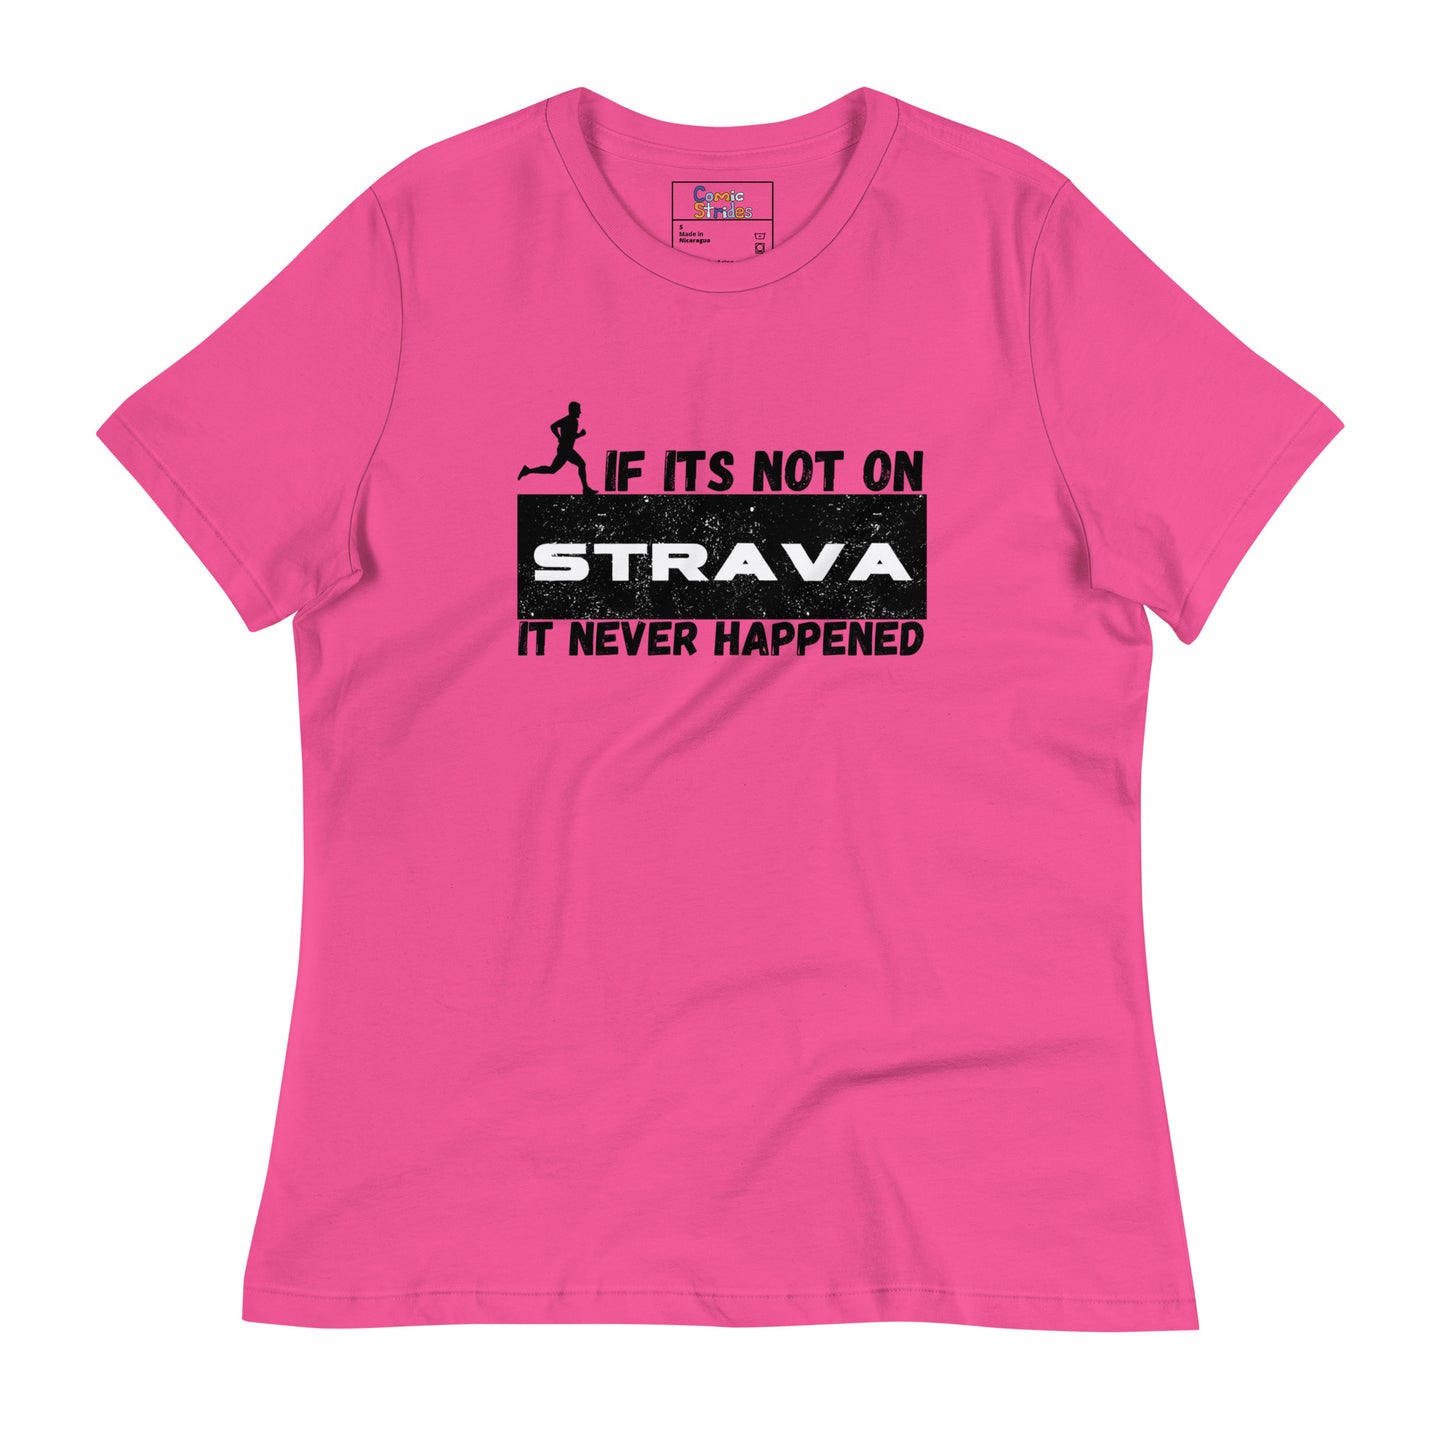 Women's "Strava" T-Shirt